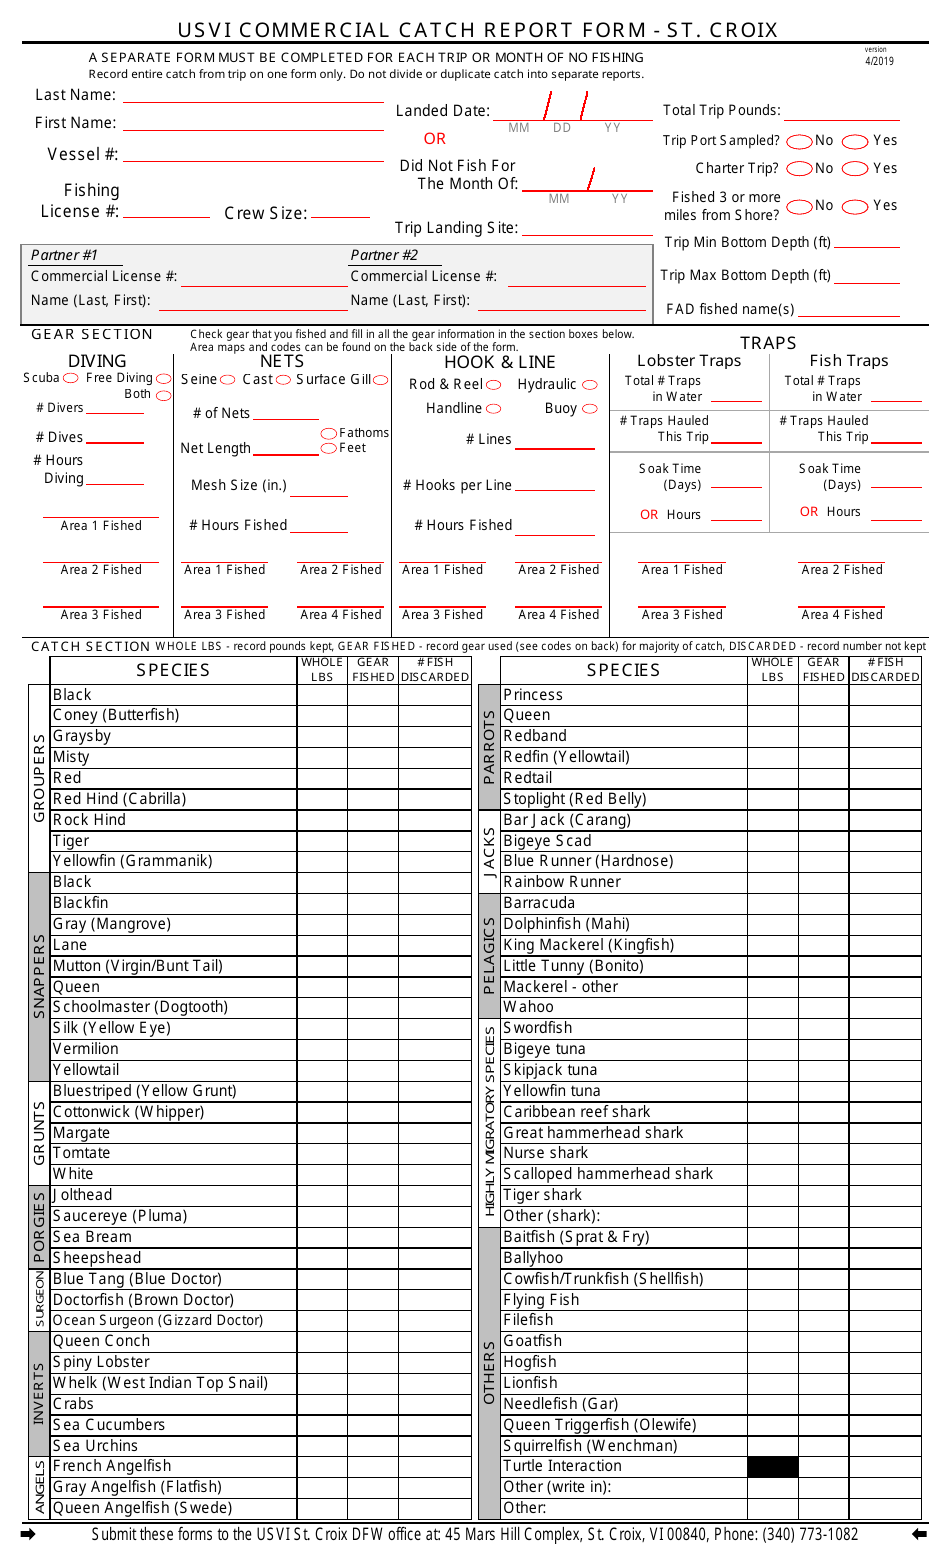 Usvi Commercial Catch Report Form - St. Croix - Virgin Islands, Page 1